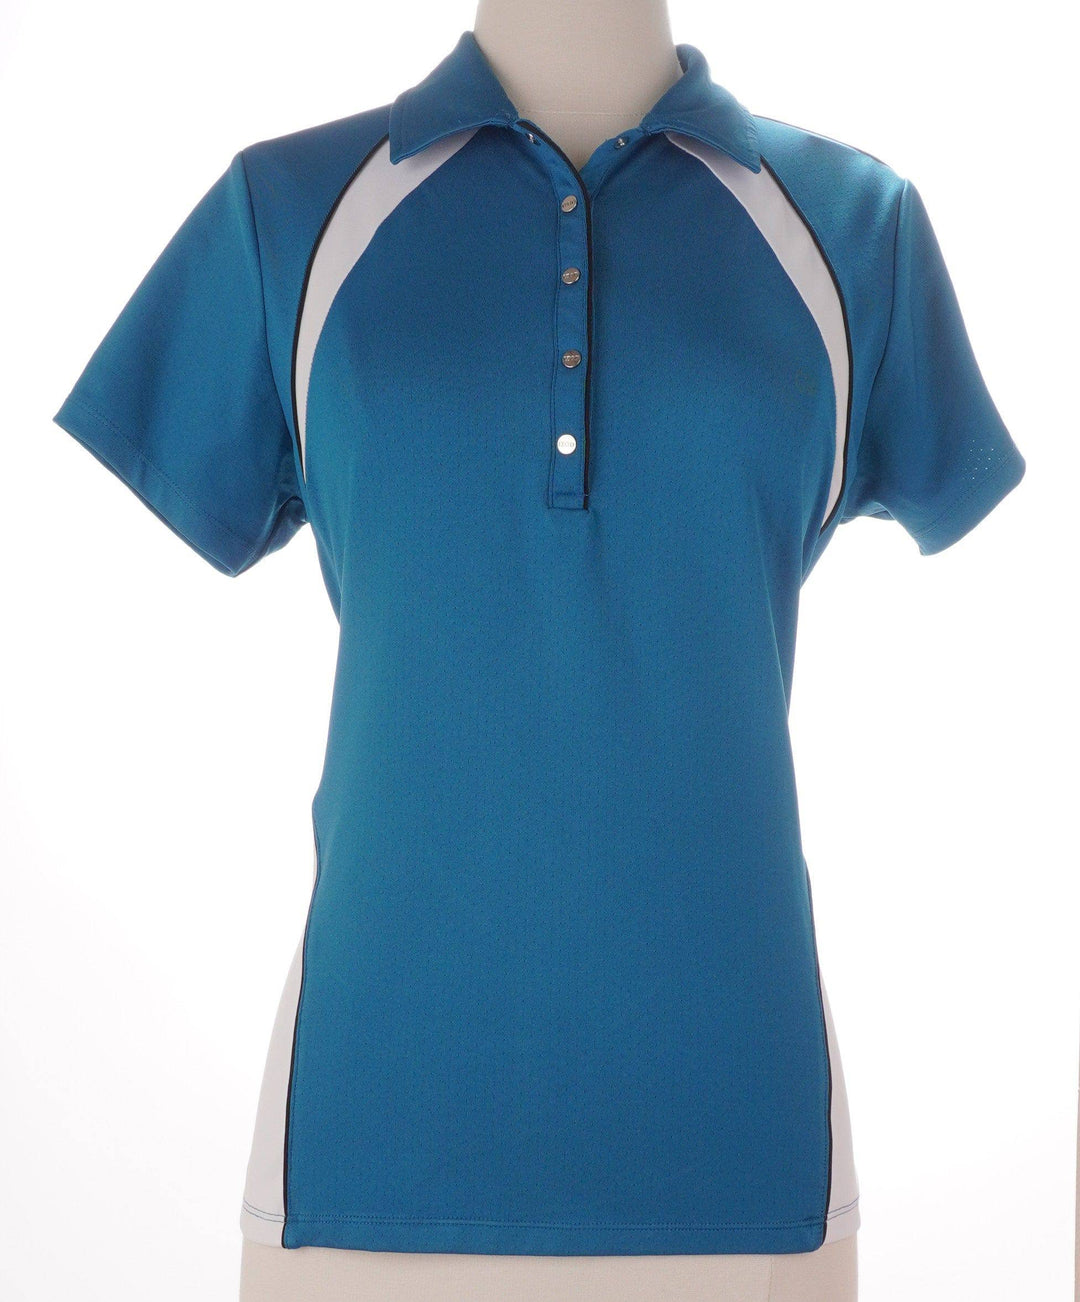 Izod Blue / Medium / Consigned Izod Short Sleeve Top - Blue - Size Medium